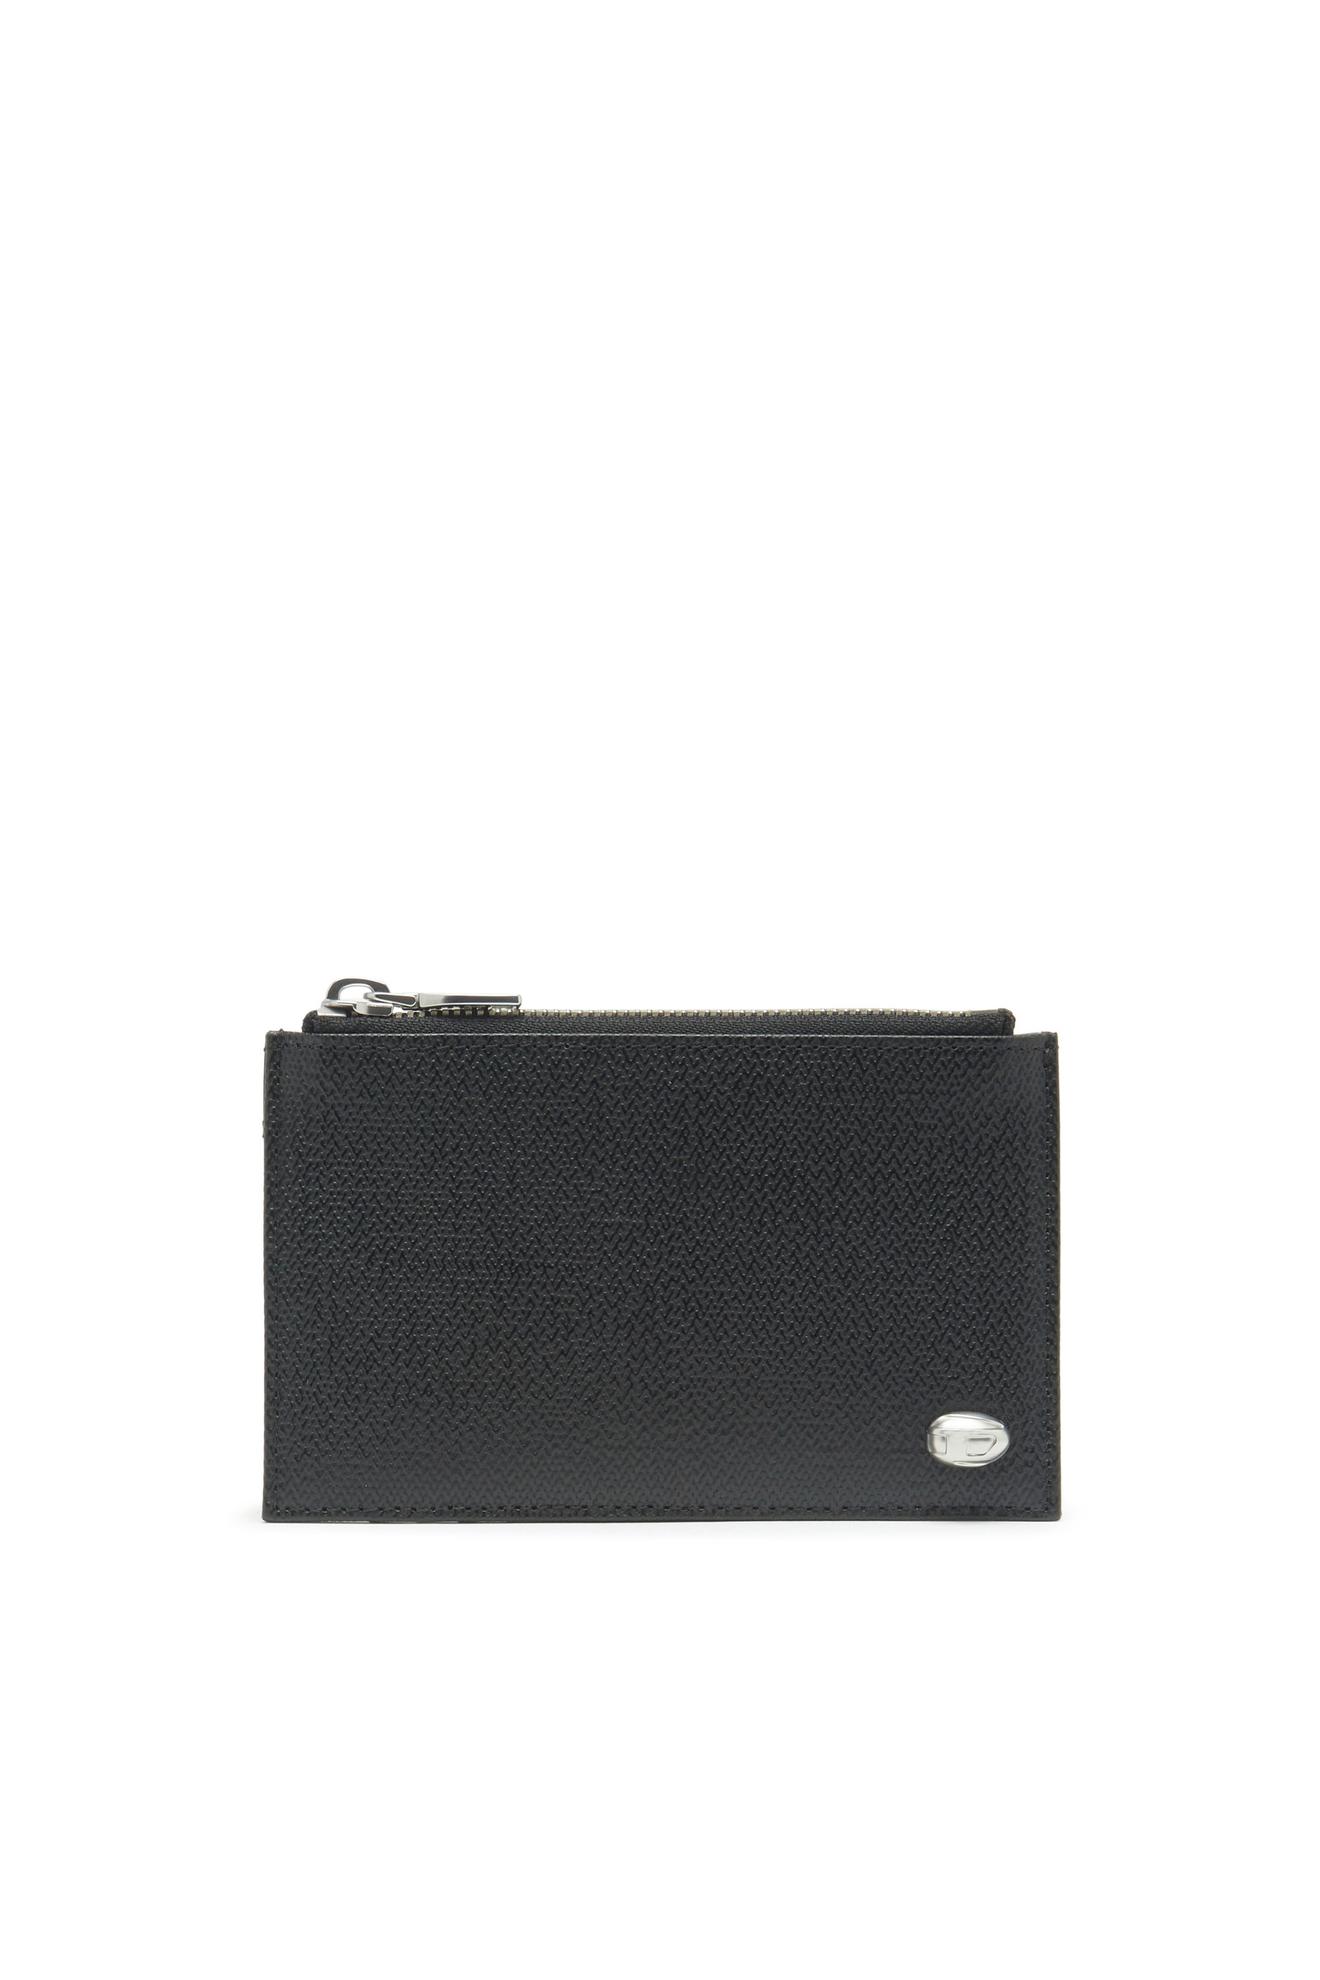 Aanbieding van Slim card holder in textured leather voor 62€ bij Diesel